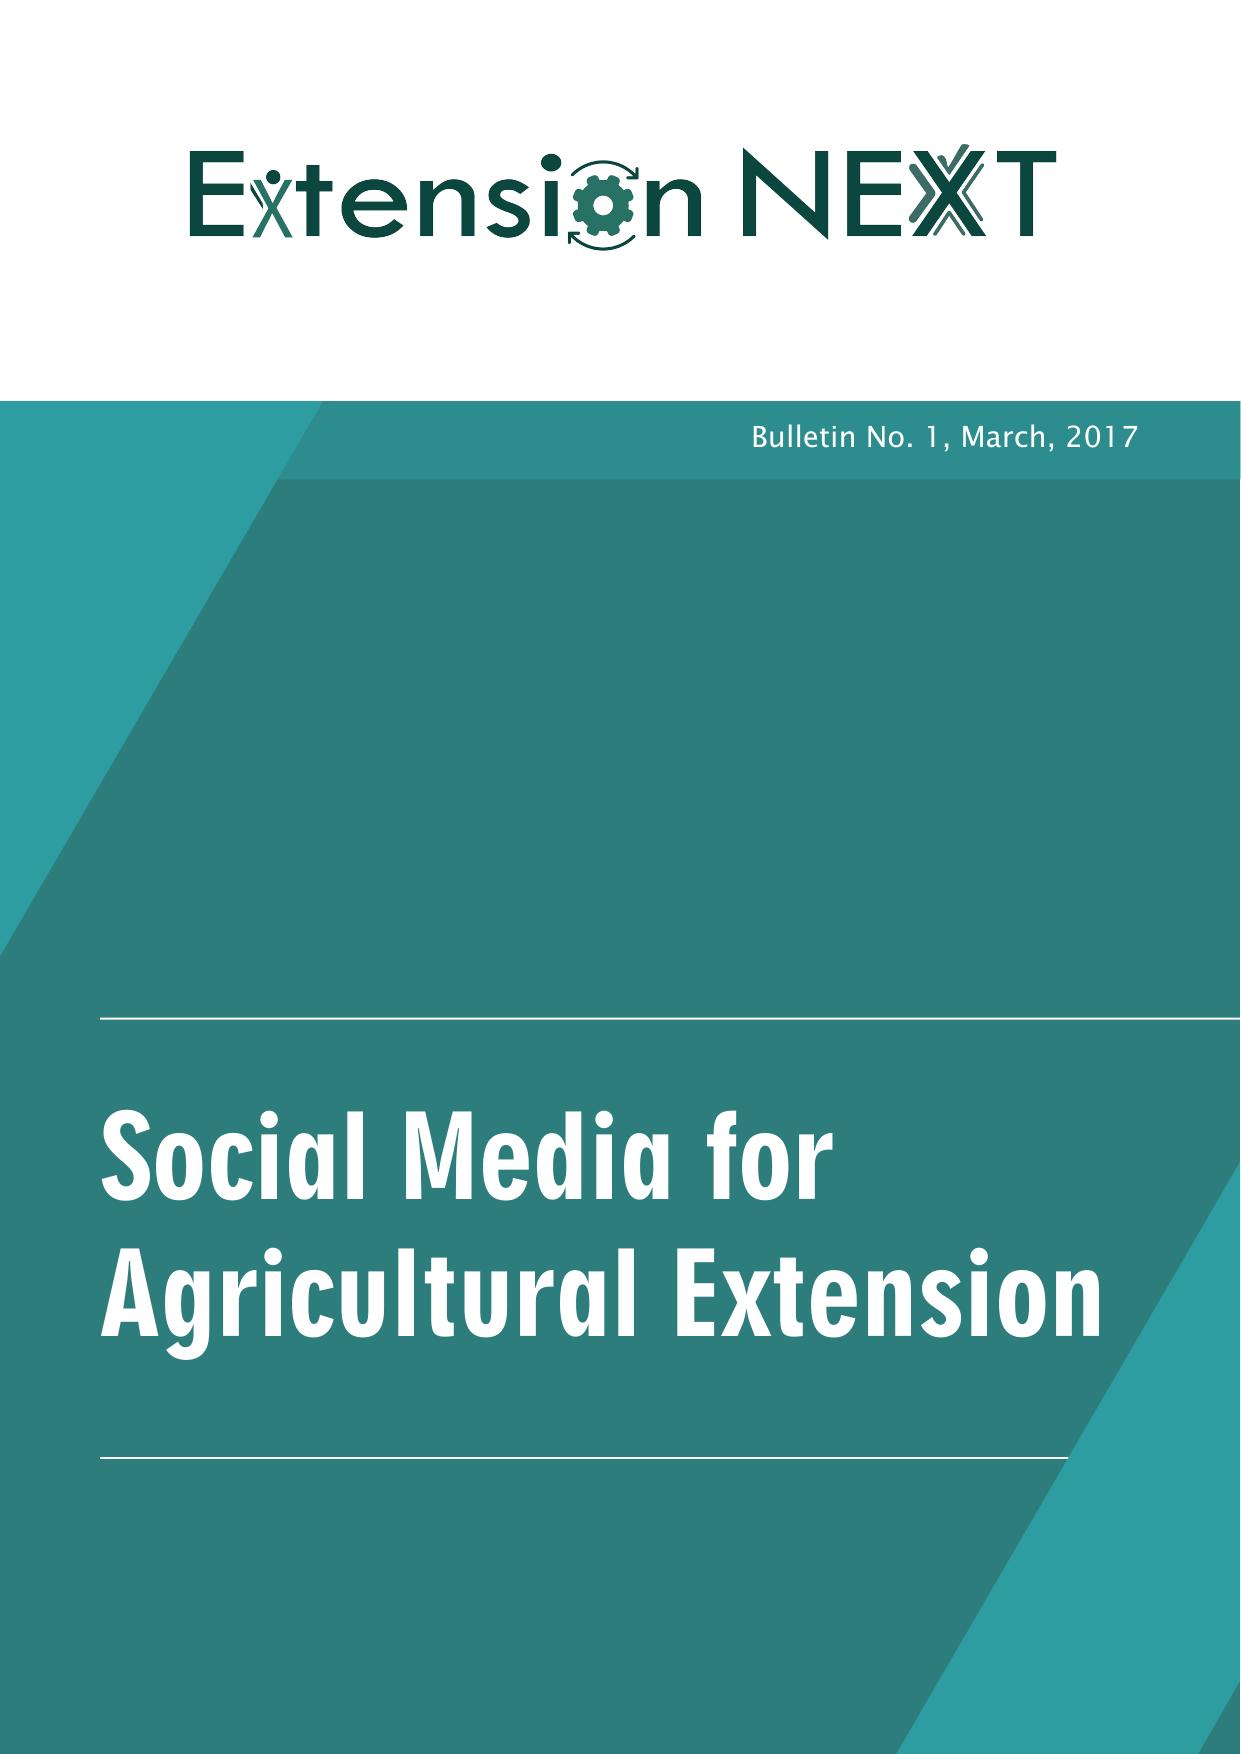 Social Media for Agricultural Extension 2017